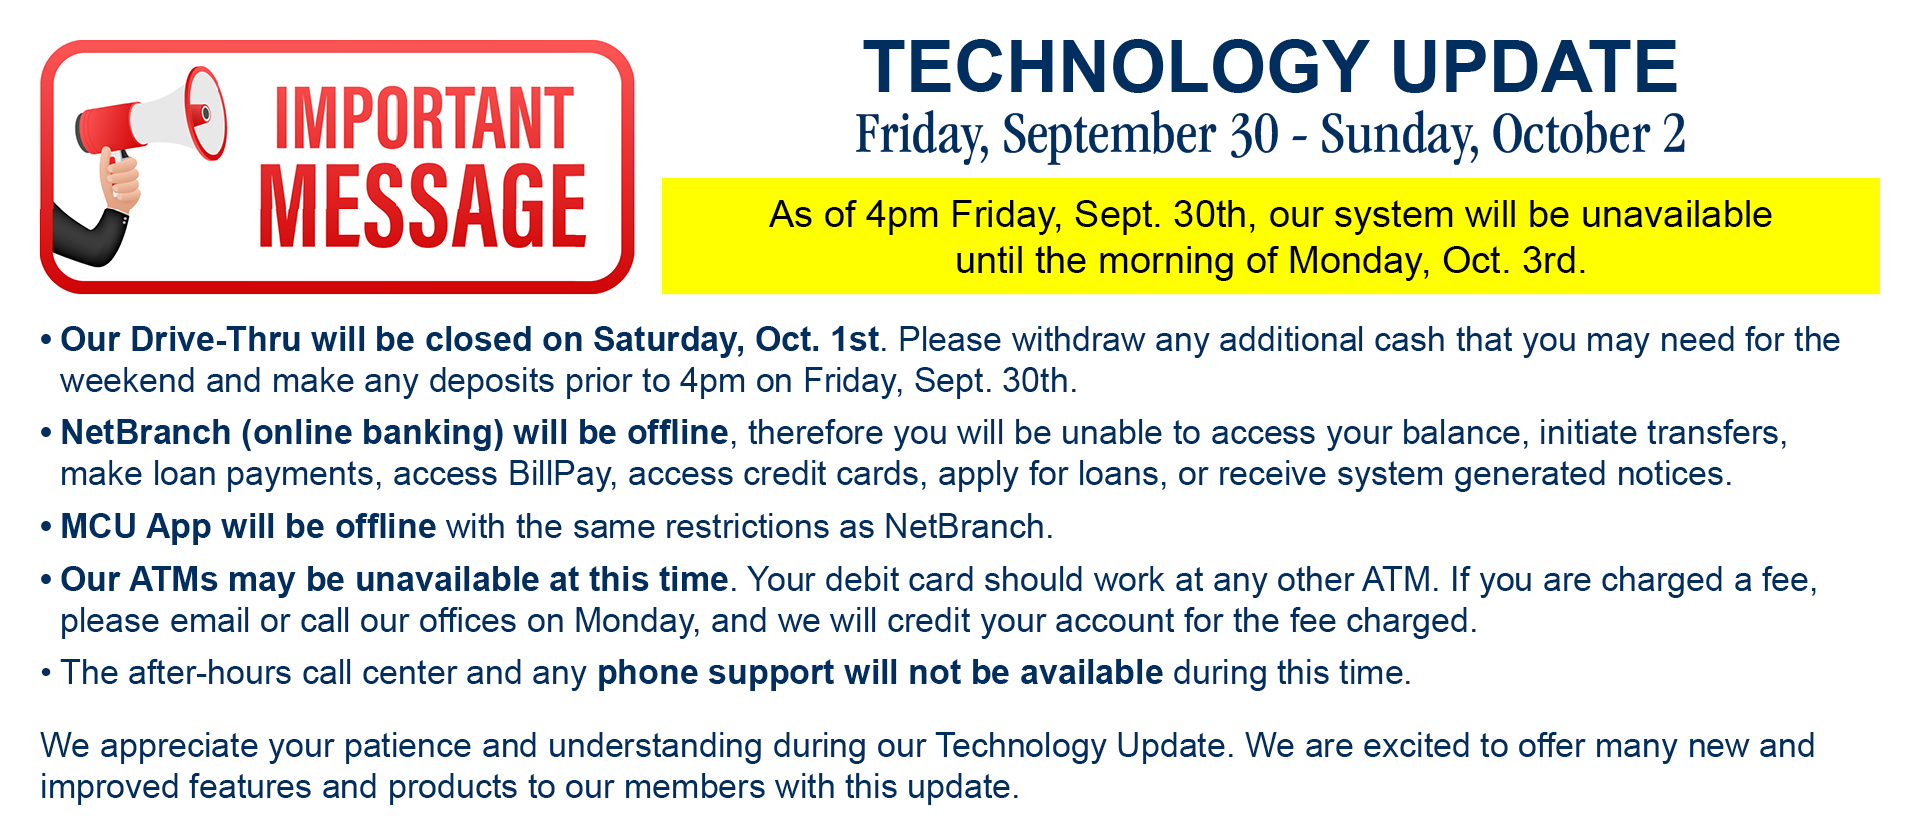 Technology Update Friday, September 30 through Sunday, October 2